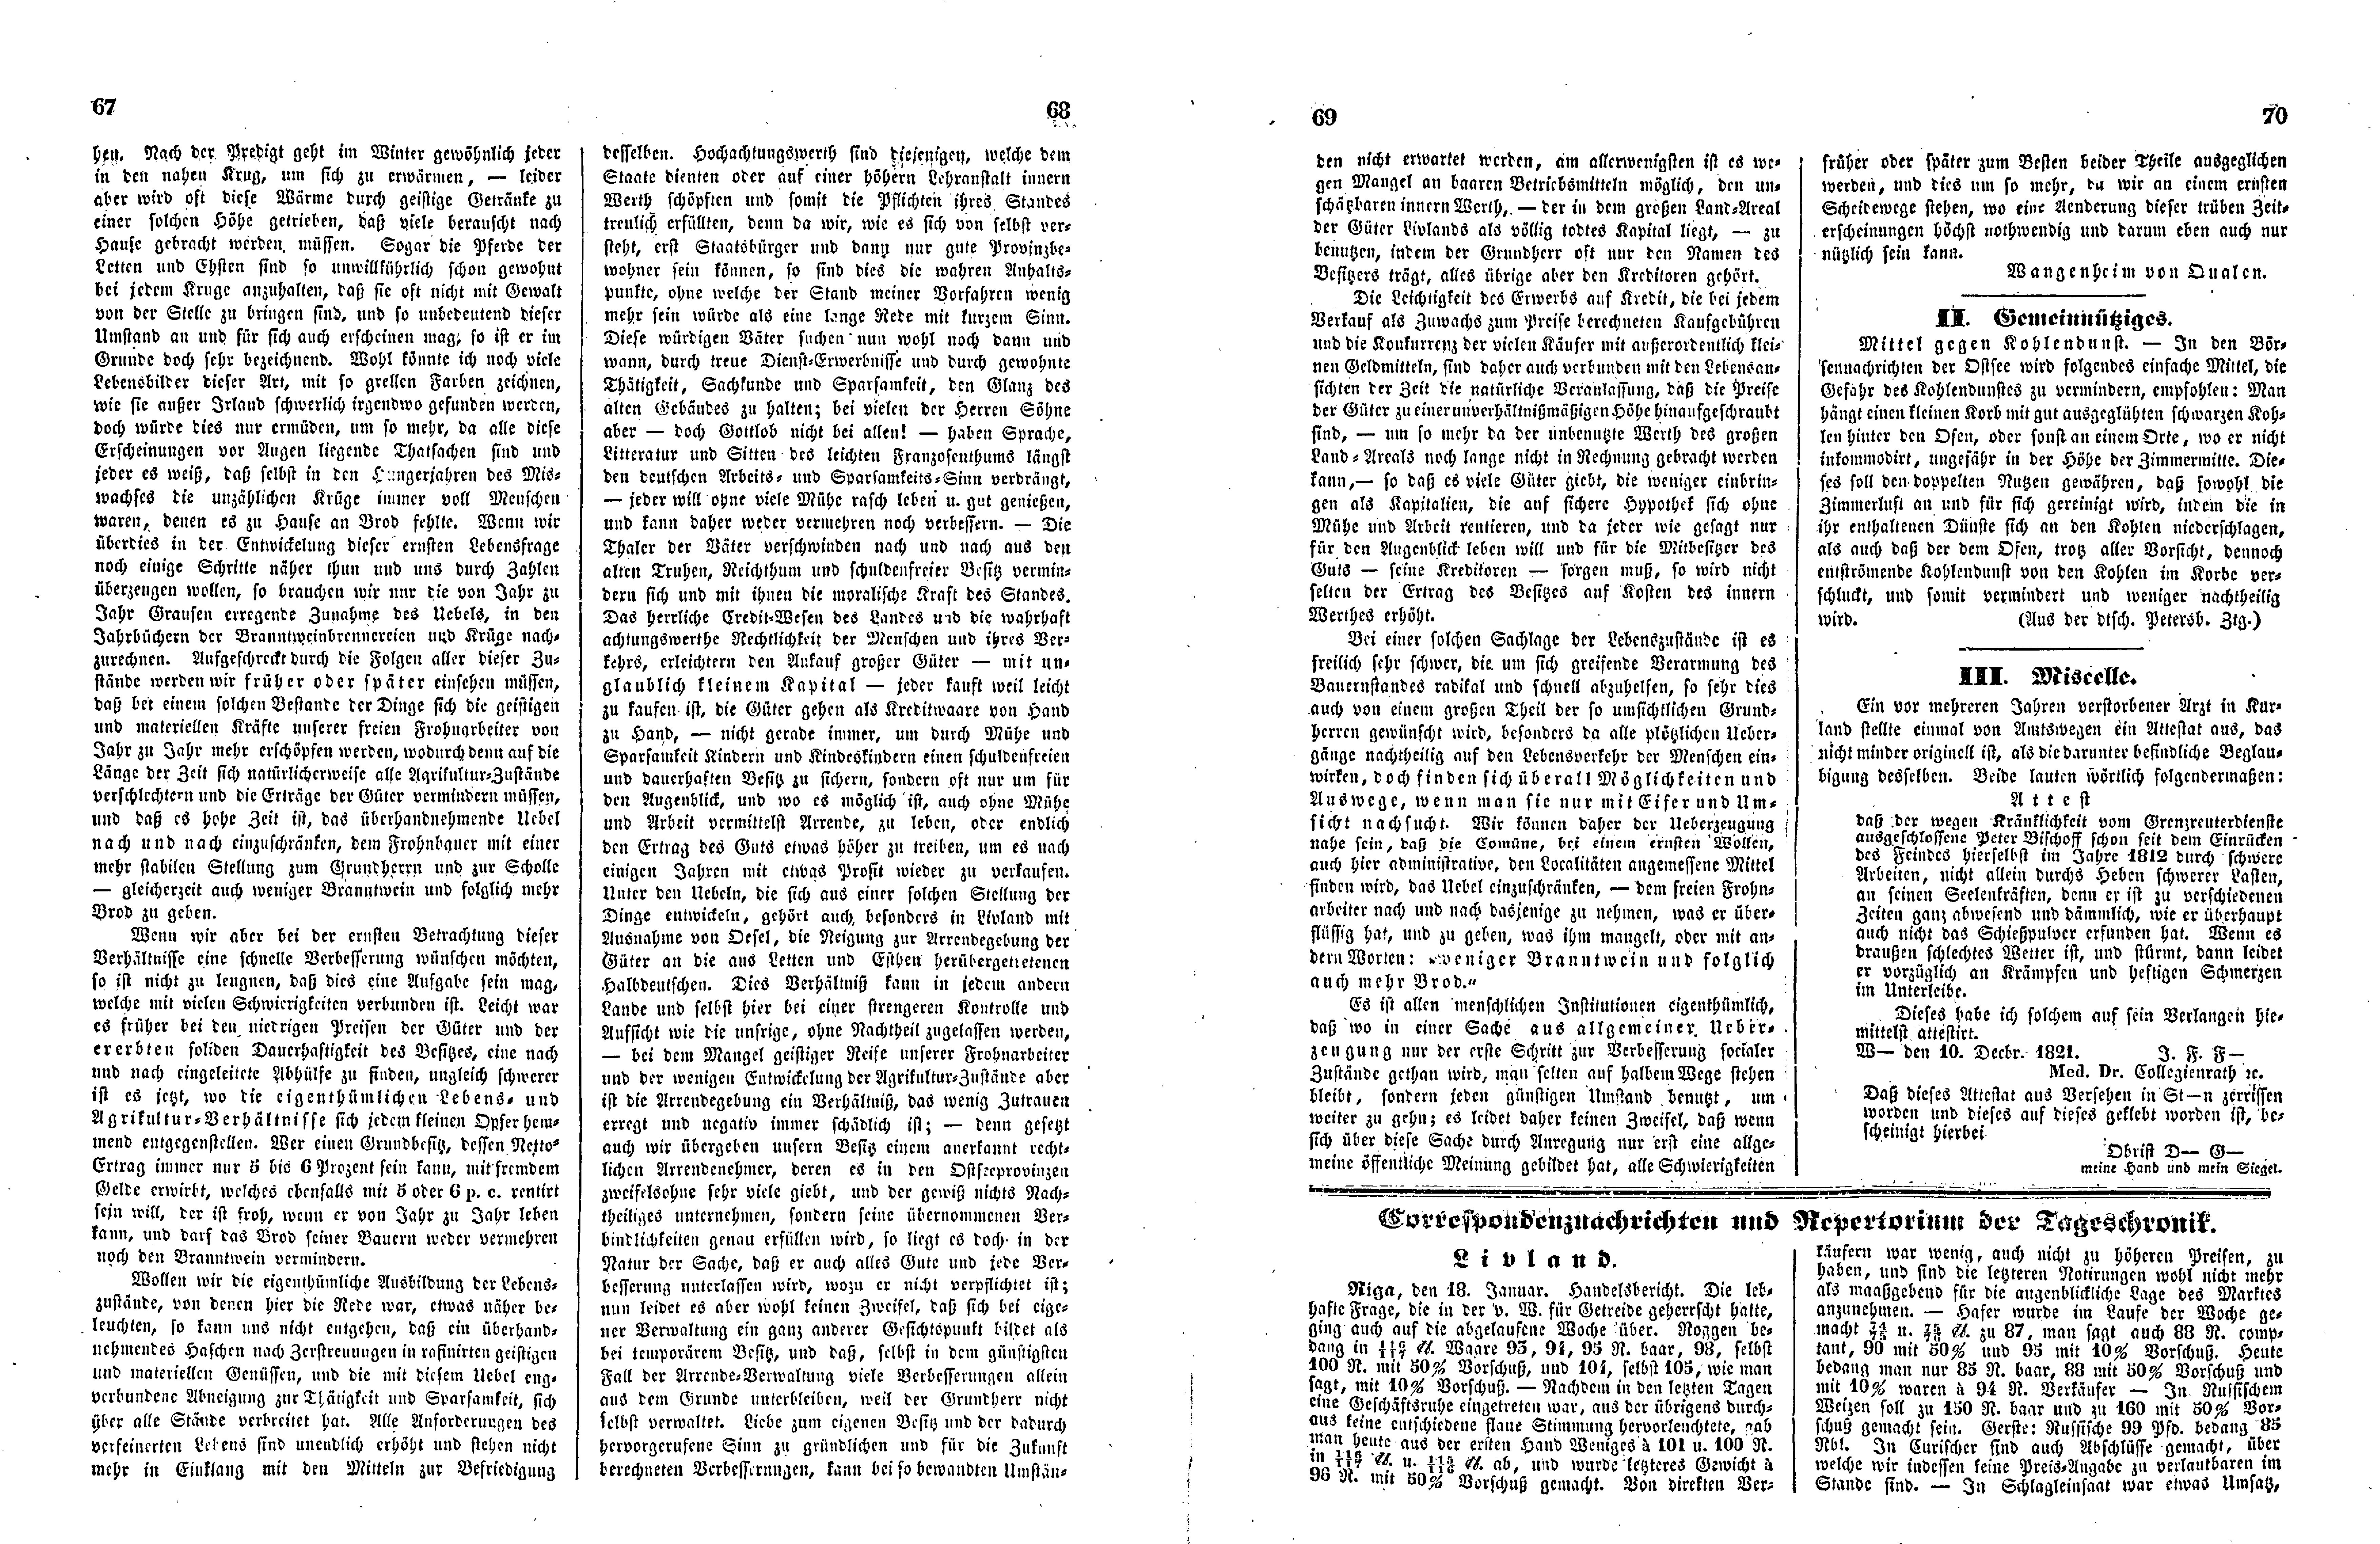 Das Inland [12] (1847) | 22. (67-70) Main body of text